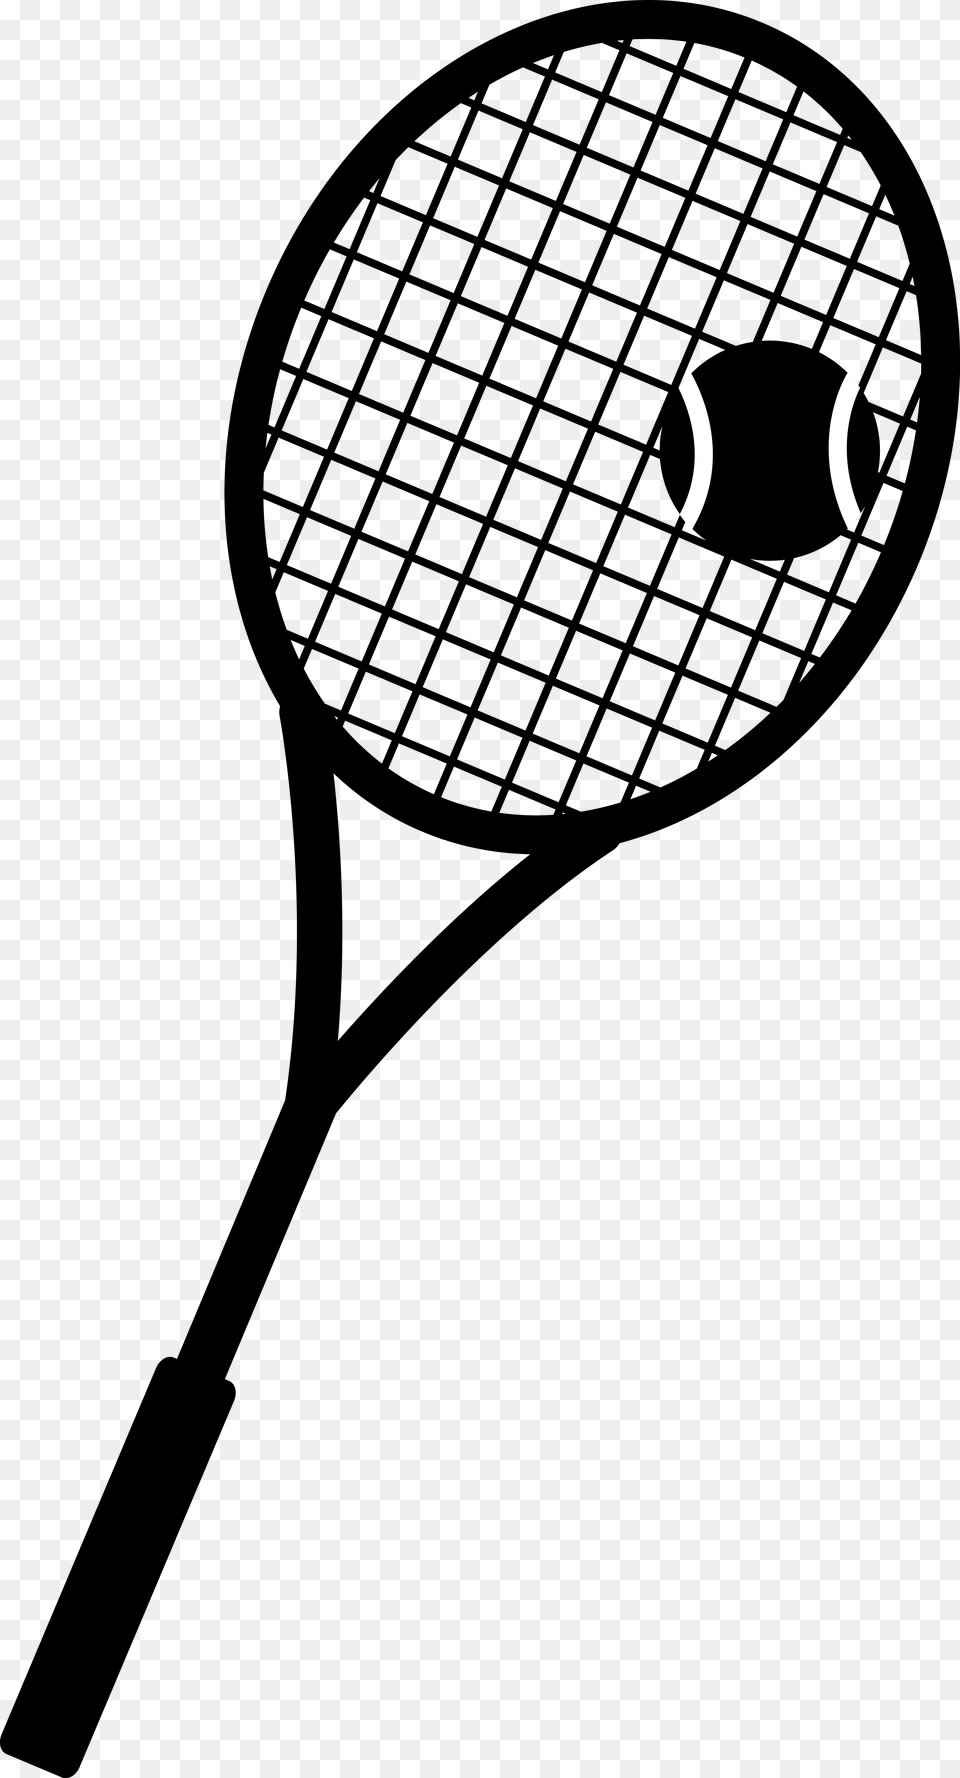 Tennis Racket Clip Art, Electronics, Hardware, Silhouette Png Image